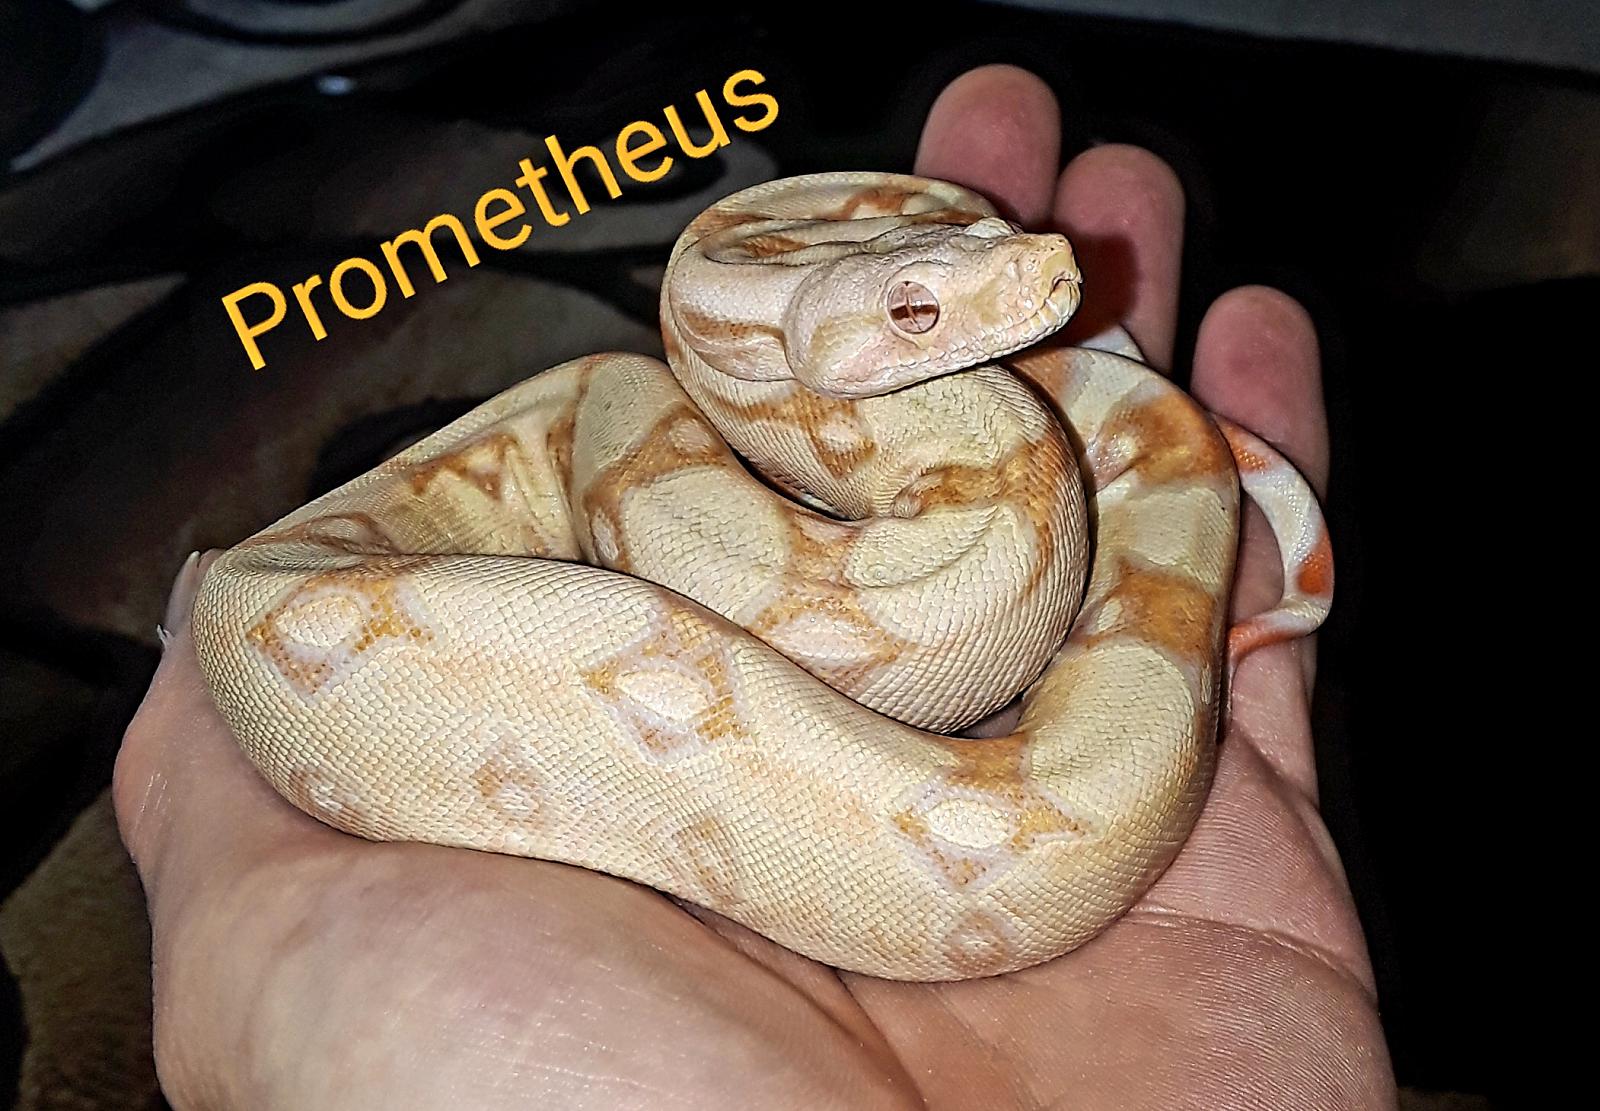 Prometheus on arrival 10/16/2018